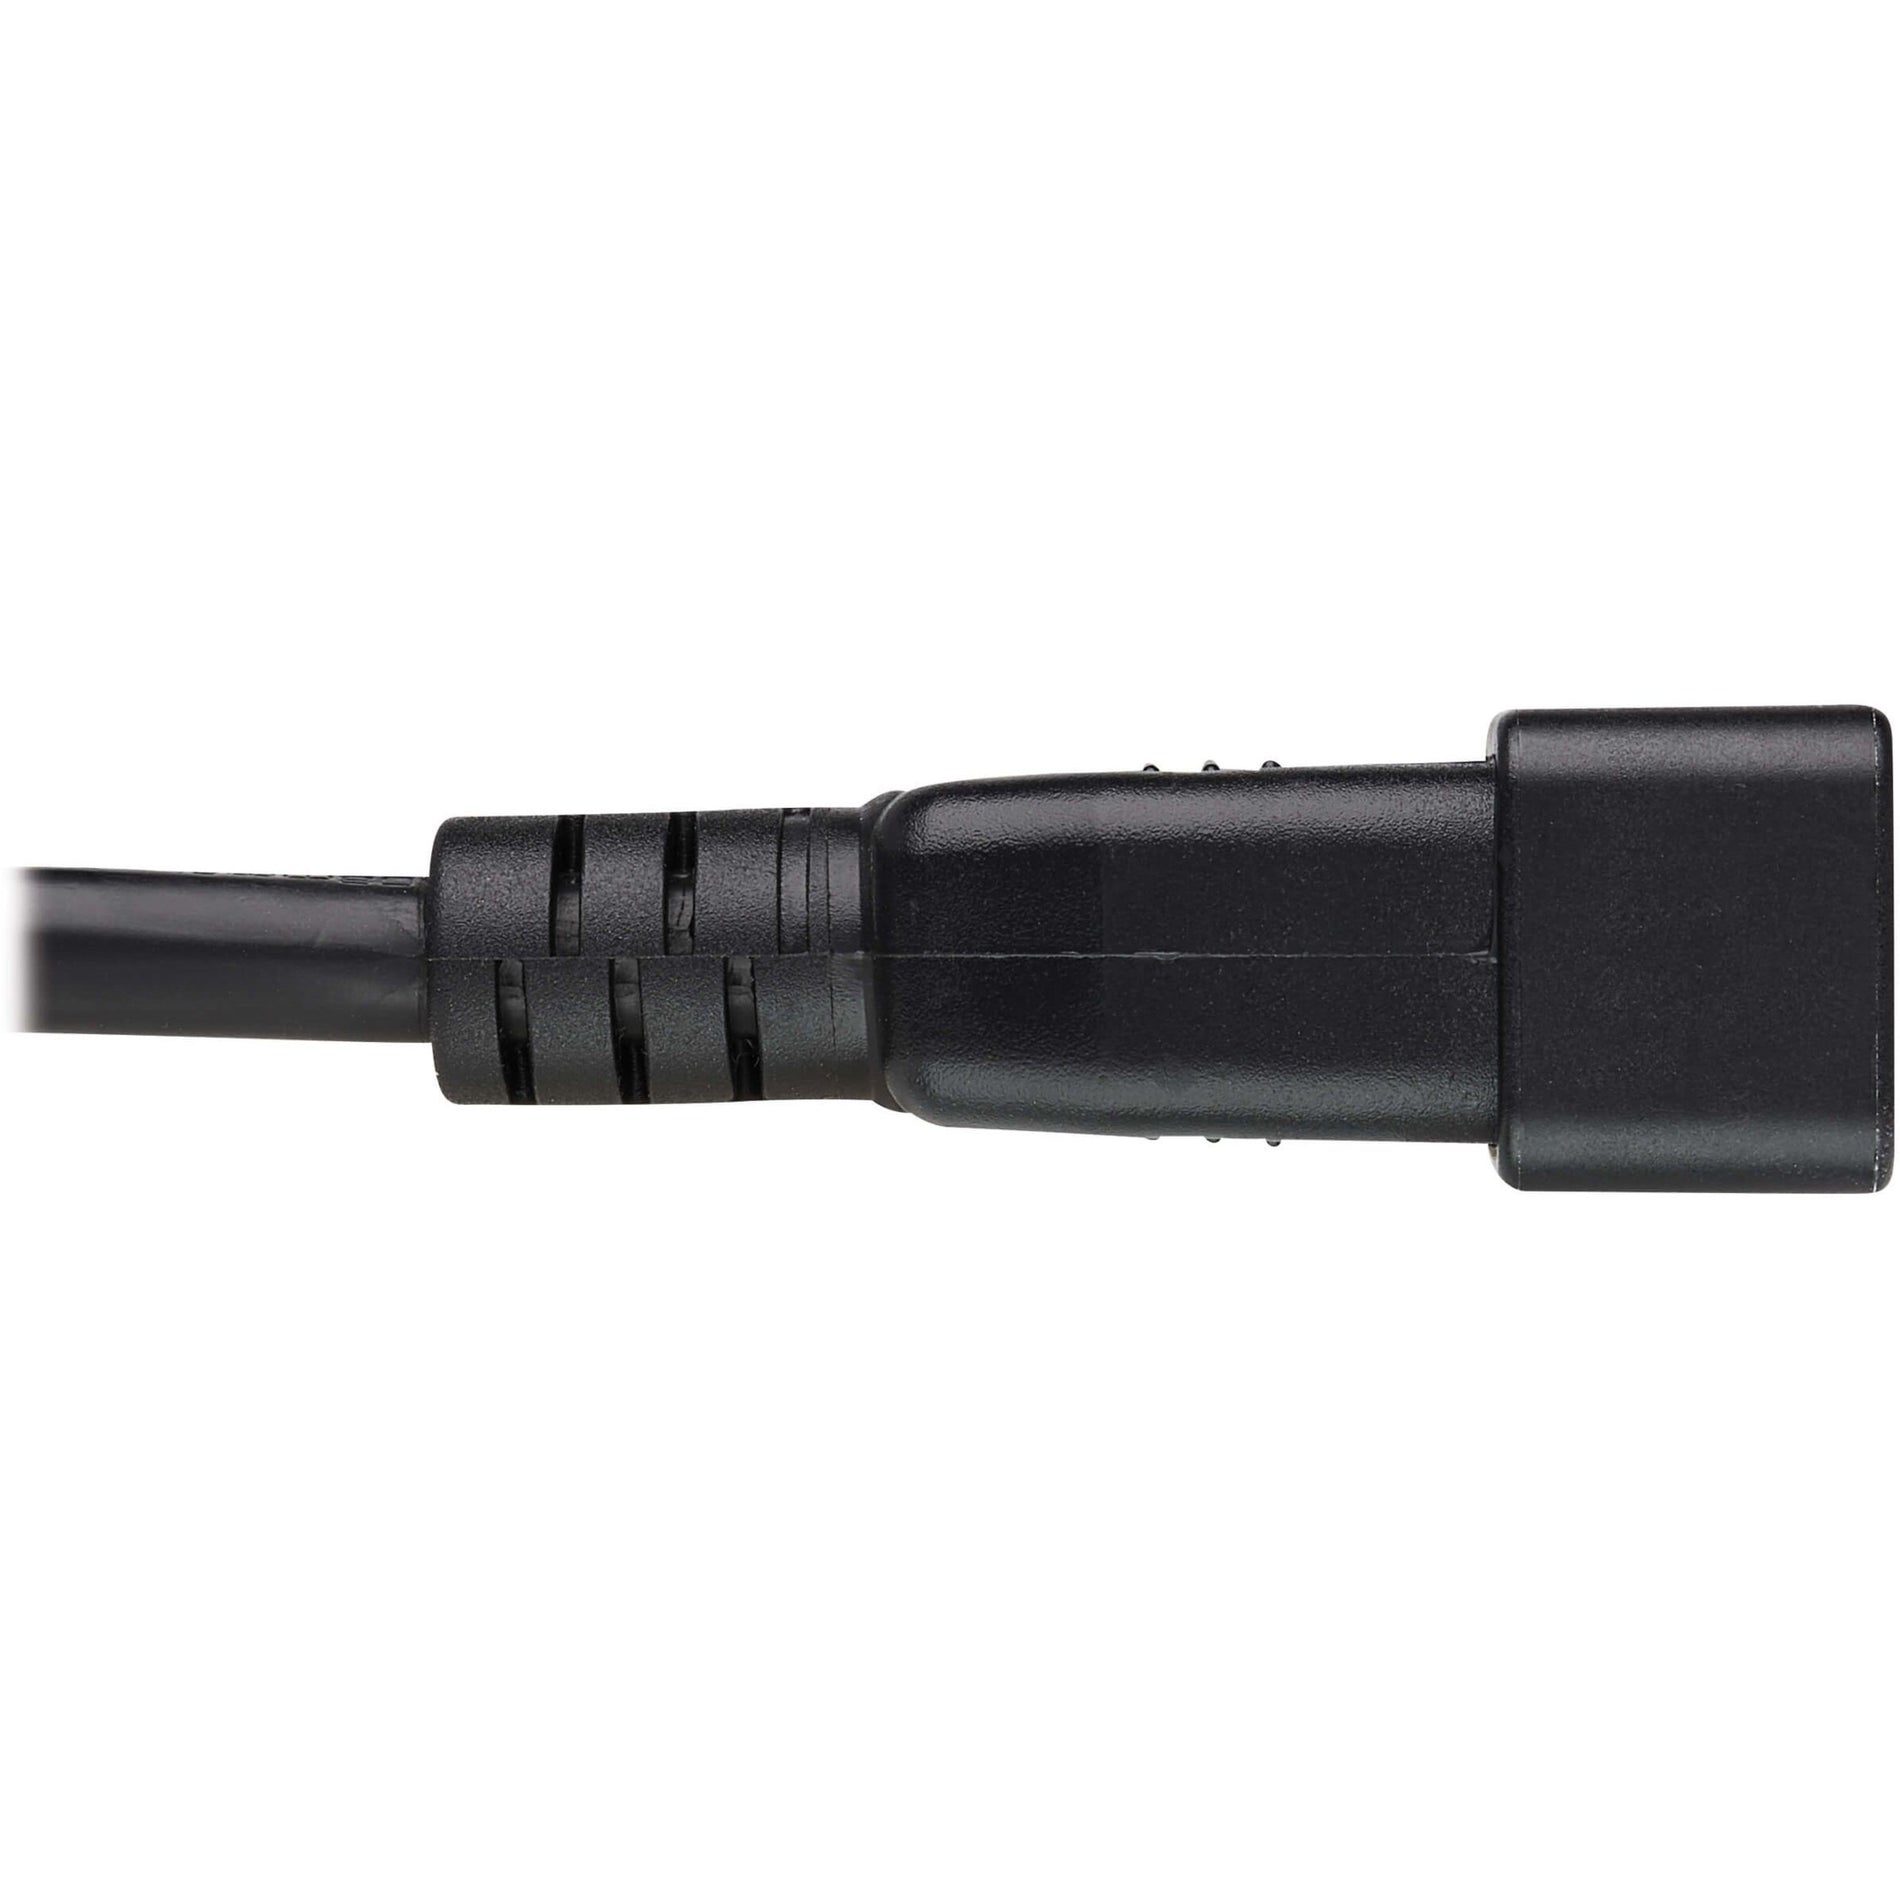 Tripp Lite P032-002-2C13 Power Cord Splitter Cable, 2 ft, 15A, 110V AC/220V AC